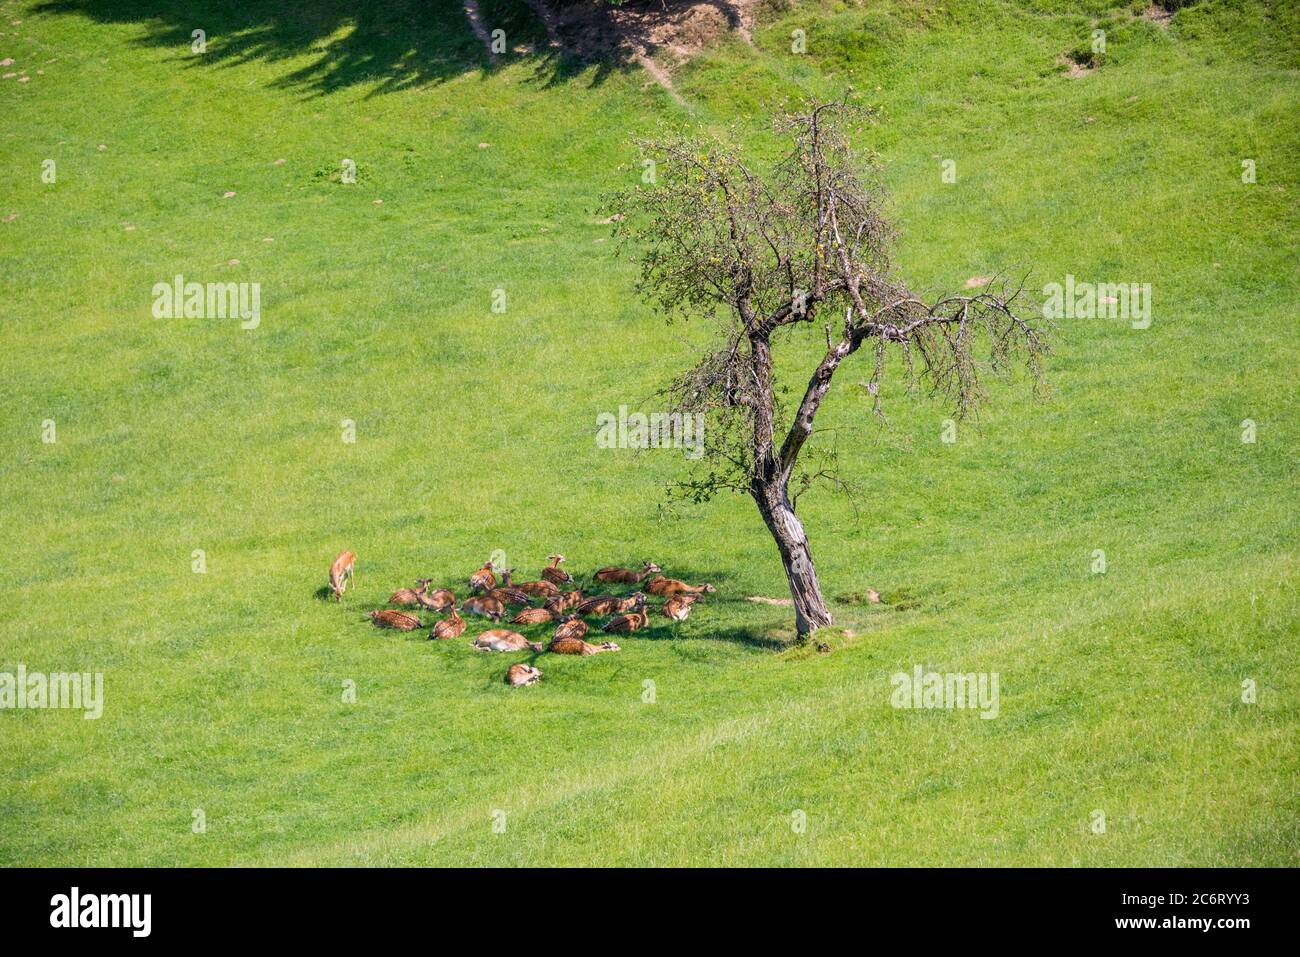 Jelenov greben, deers resting on meadow, deer farm in Olimje, Slovenia Stock Photo